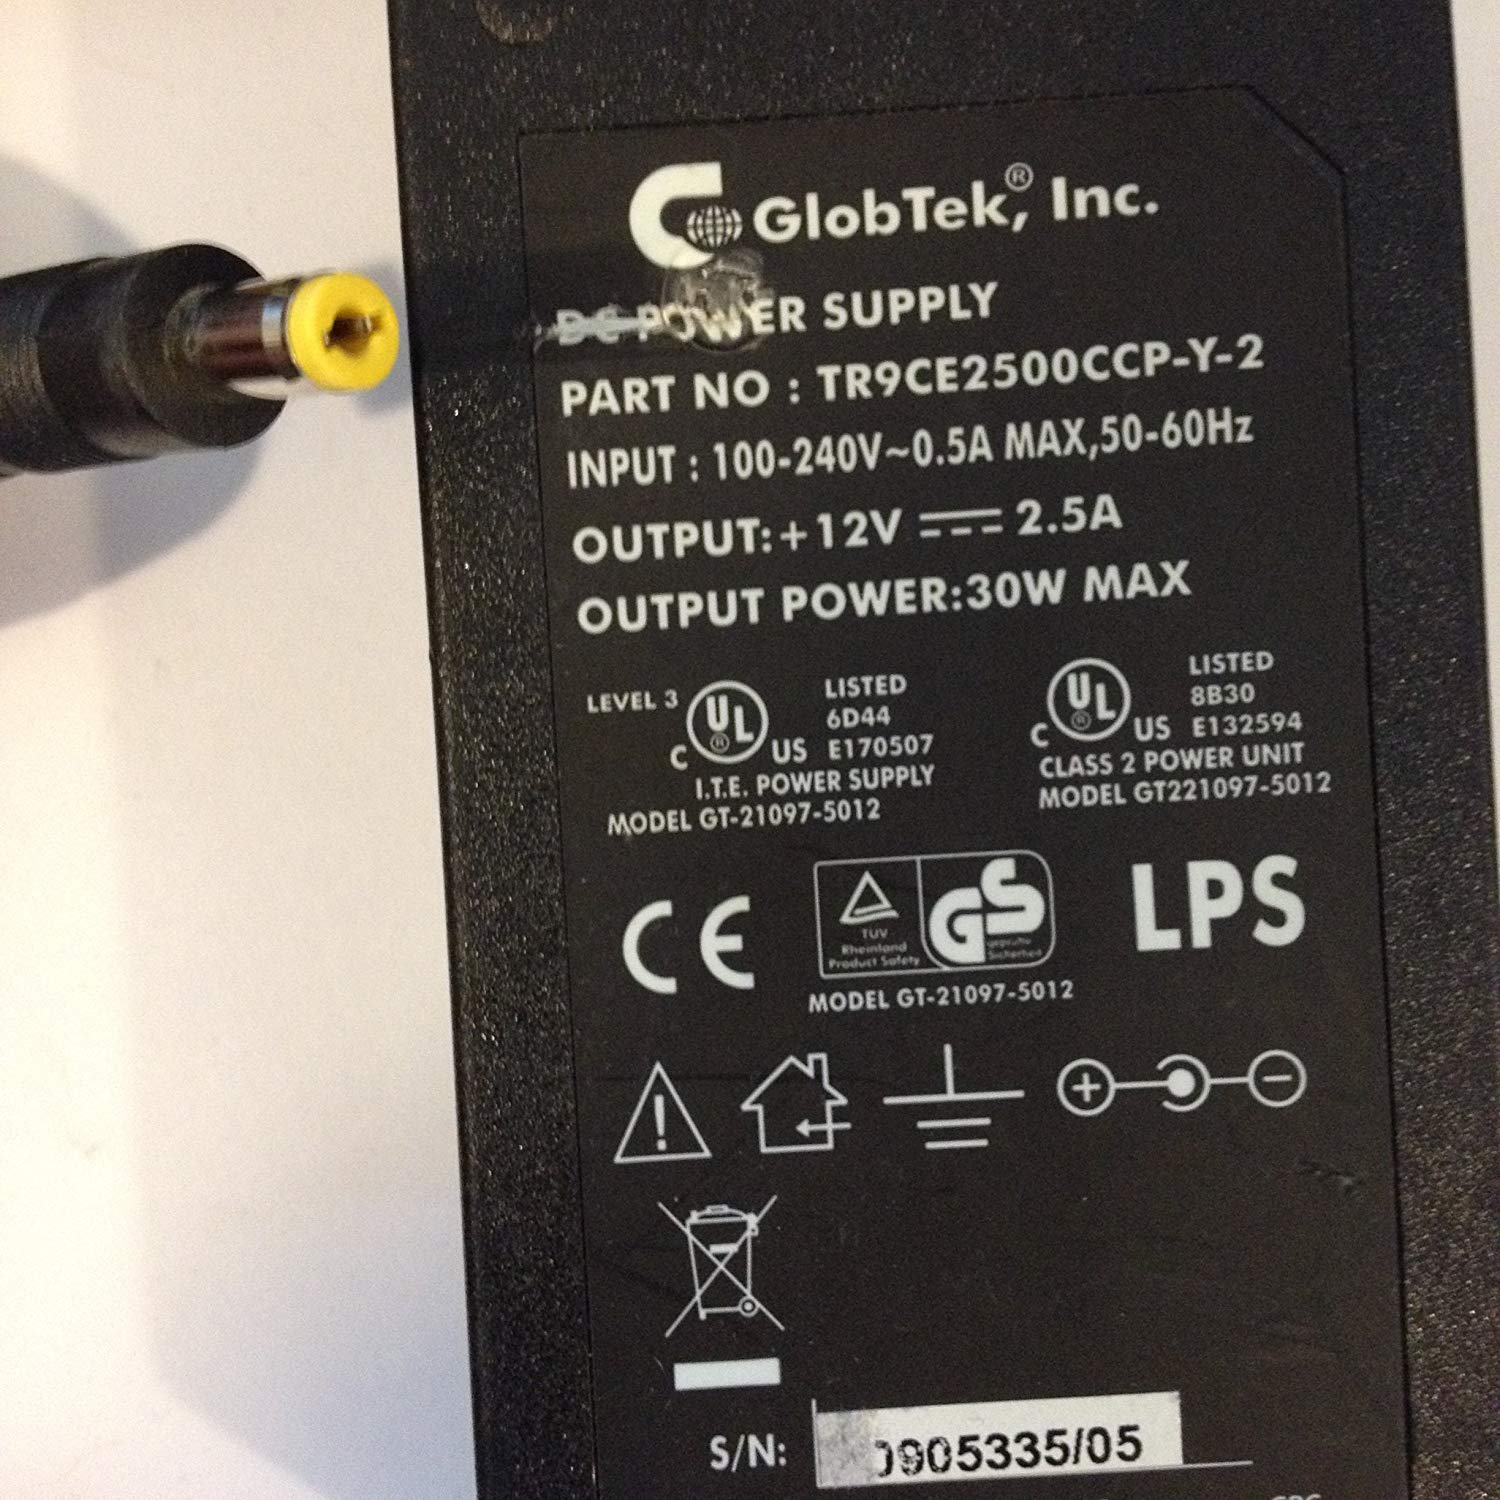 New GLOBTEK INC 12V 2.5A TR9CE2500CCP-Y-2 5.5MM X 2.1MM Power Adapter Supply - Click Image to Close